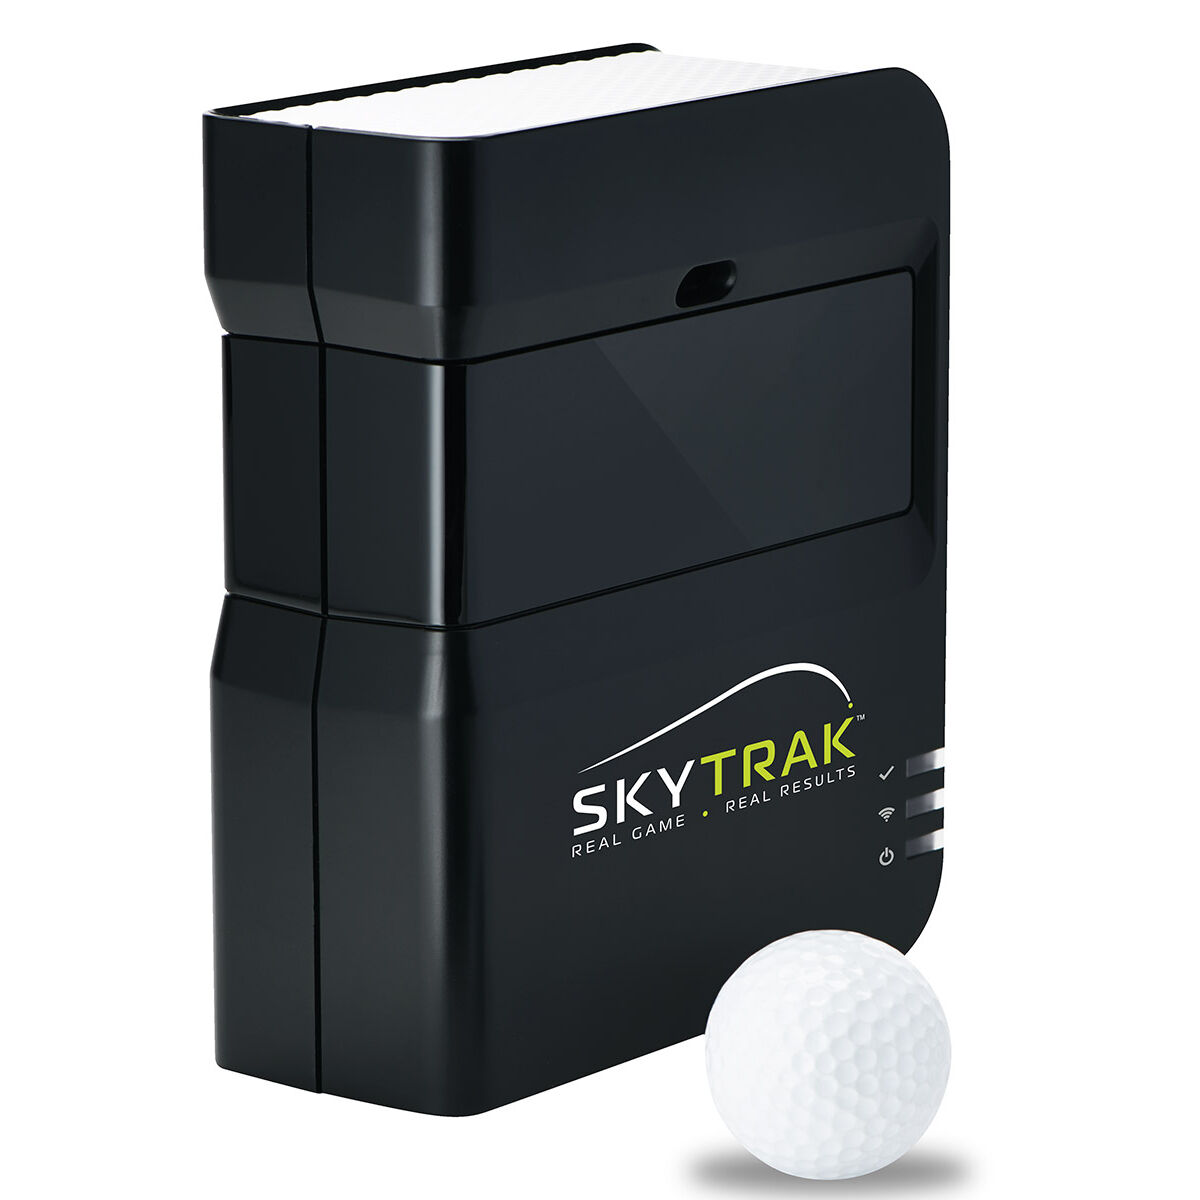 SkyCaddie Black SkyTrak Personal Launch Monitor & Simulator, One Size | American Golf von SkyCaddie